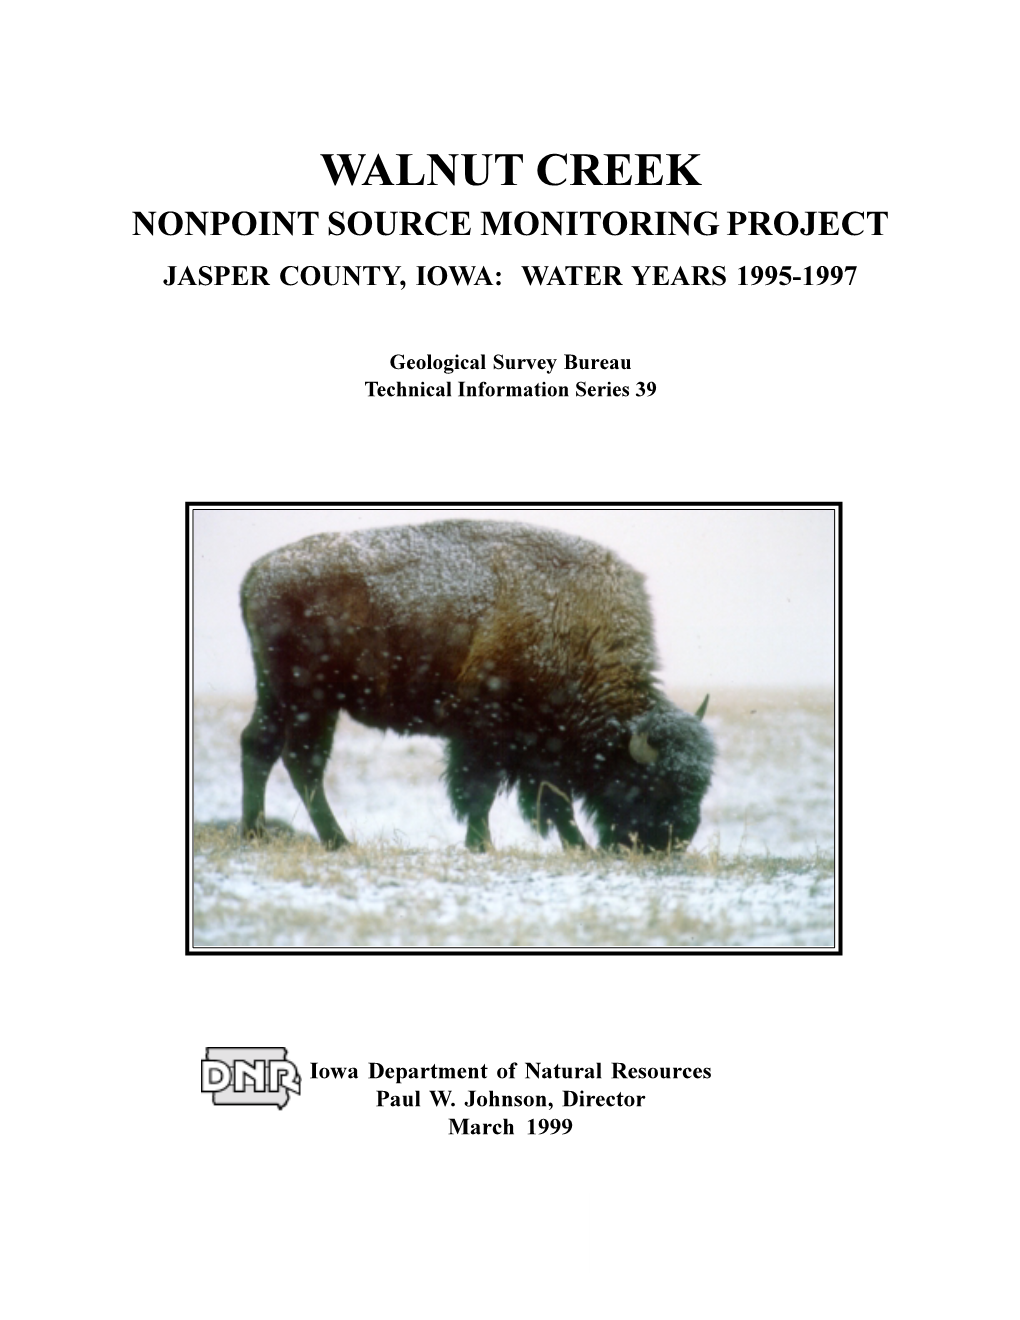 Walnut Creek Nonpoint Source Monitoring Project Jasper County, Iowa: Water Years 1995-1997